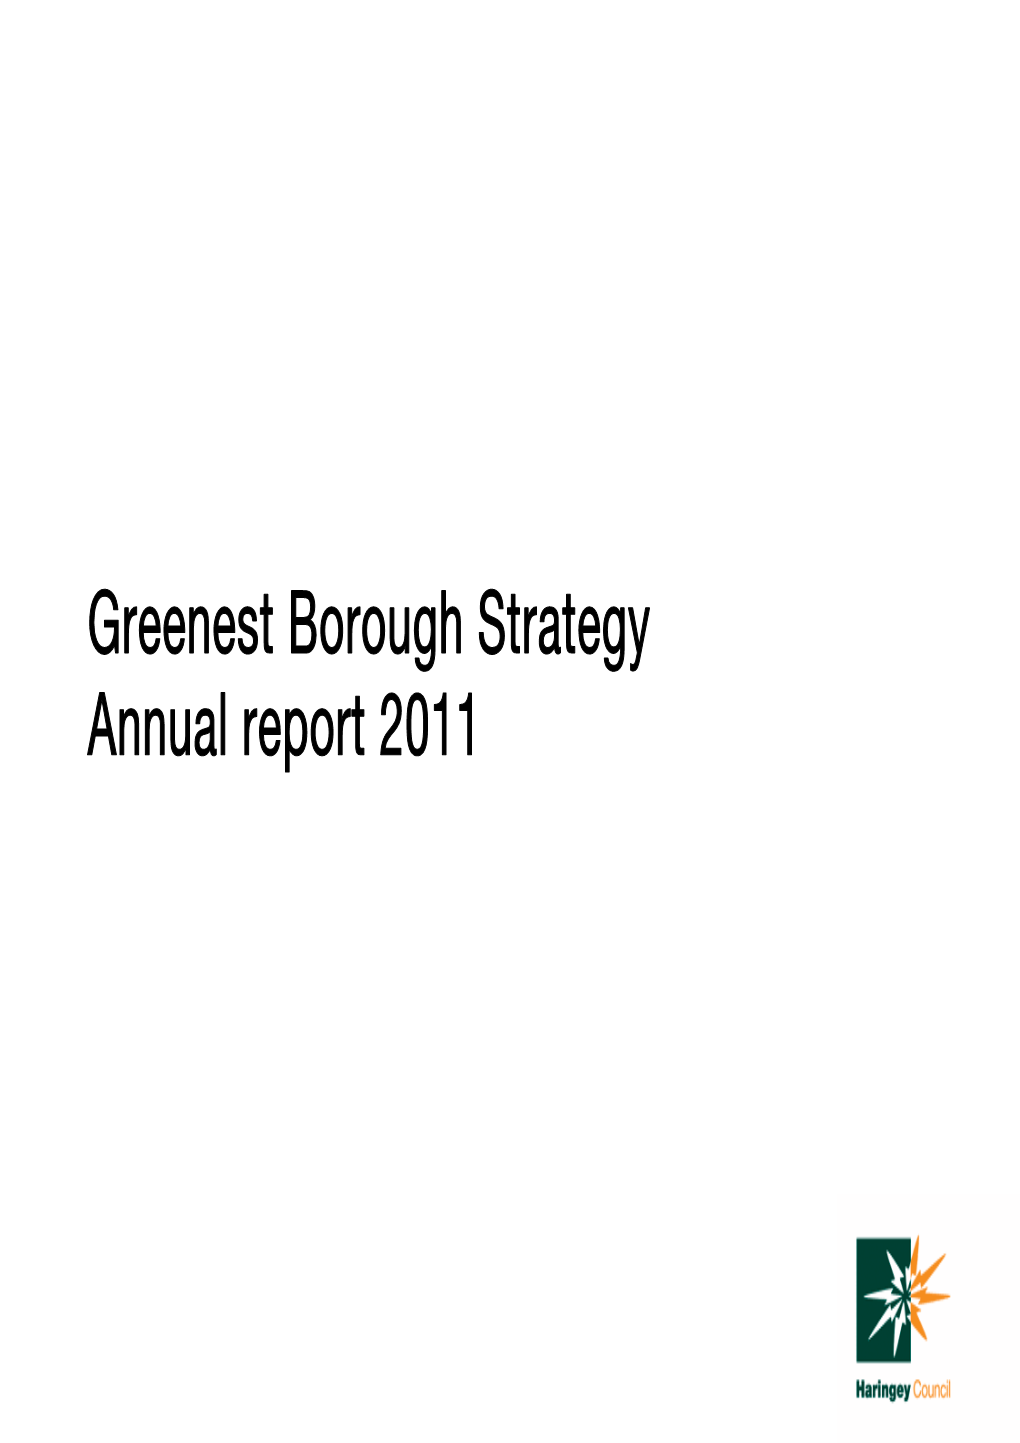 Greenest Borough Strategy Annual Report 2011